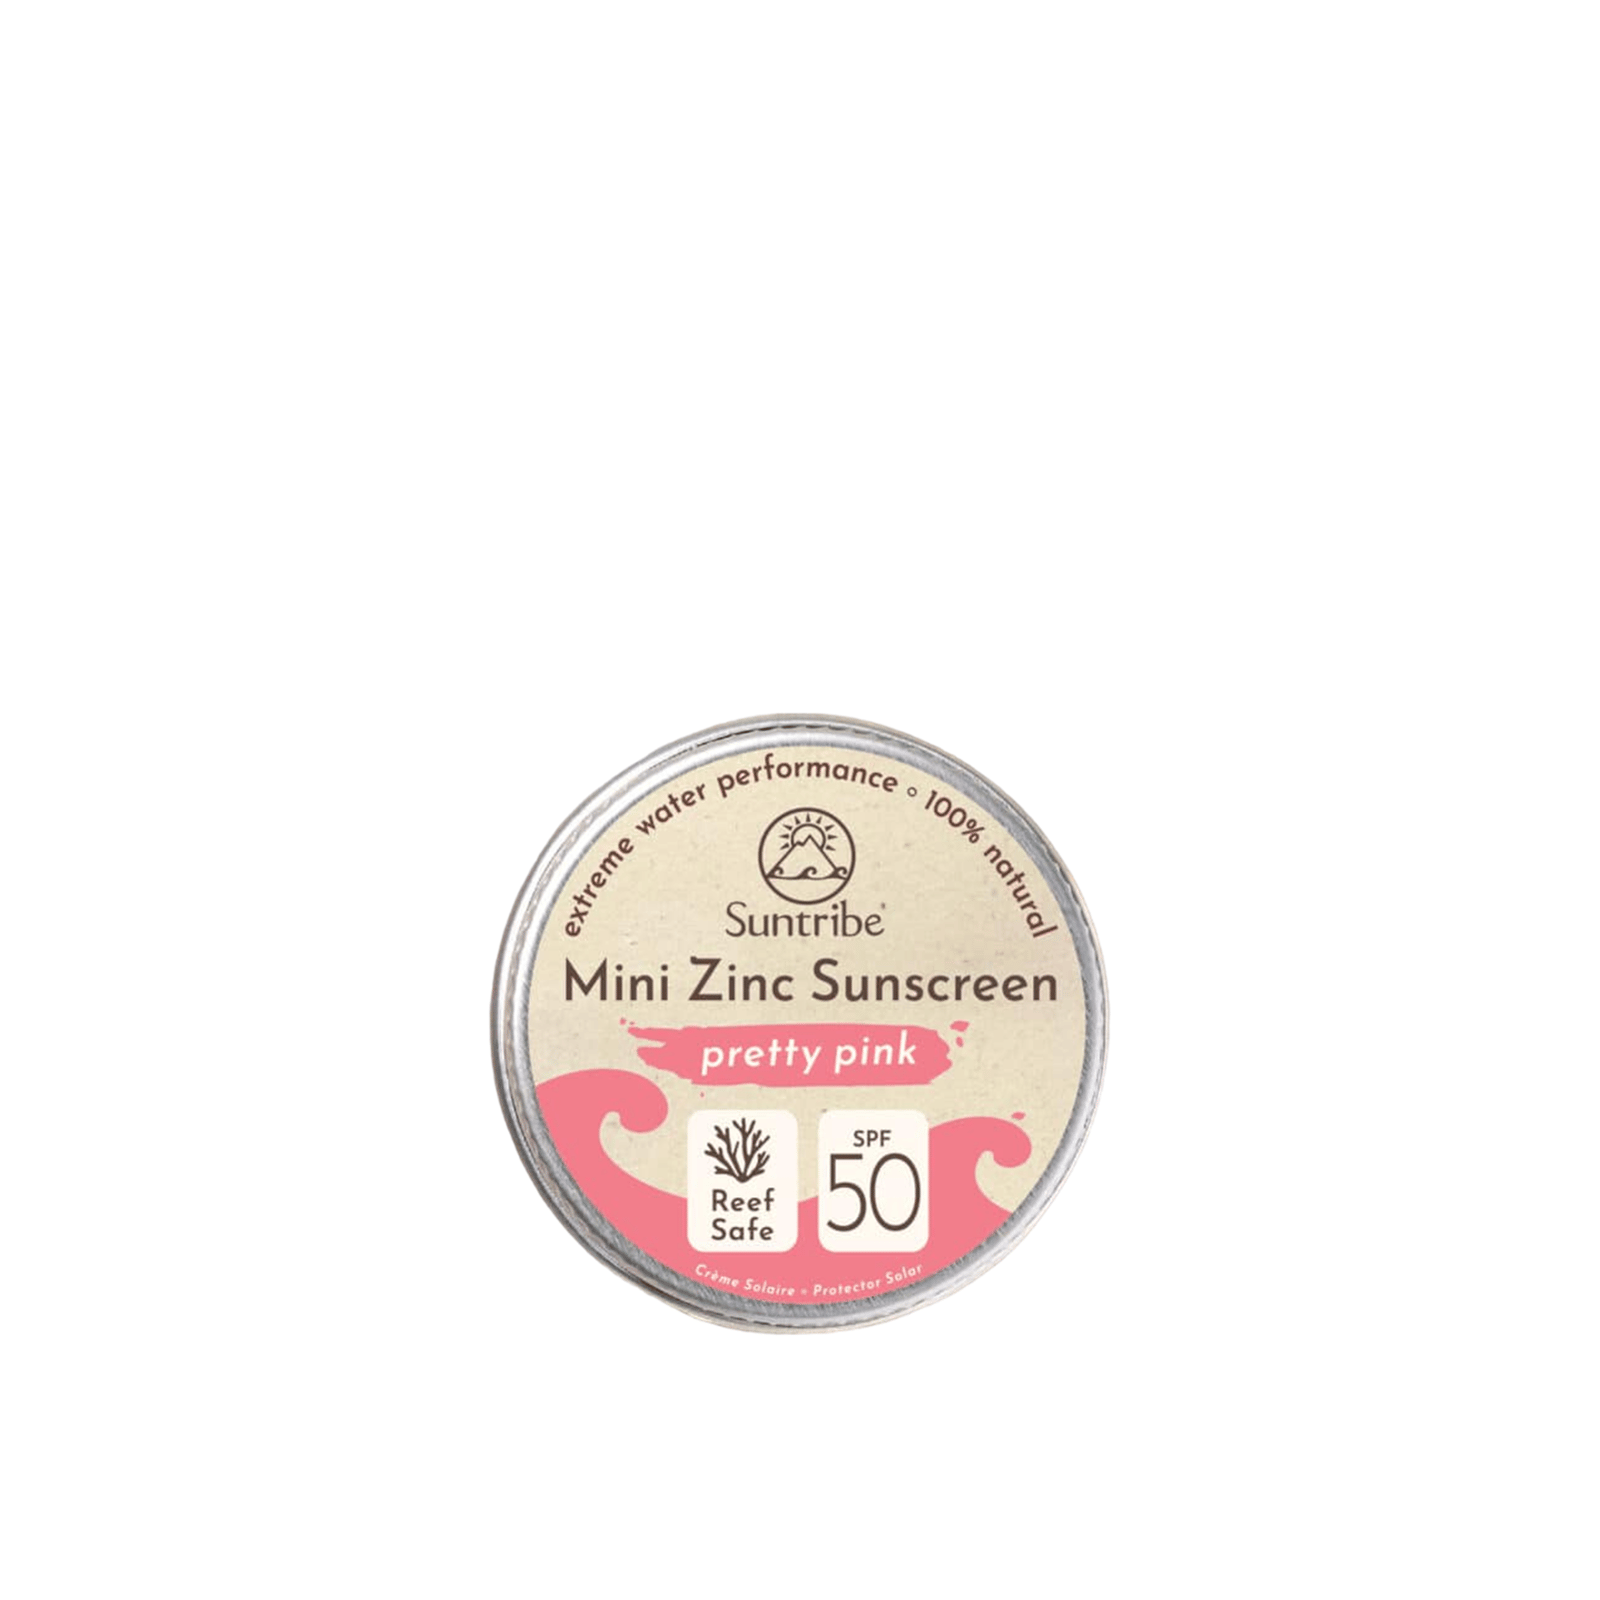 Suntribe Mini Zinc Sunscreen SPF50 Pretty Pink 15g (0.52oz)